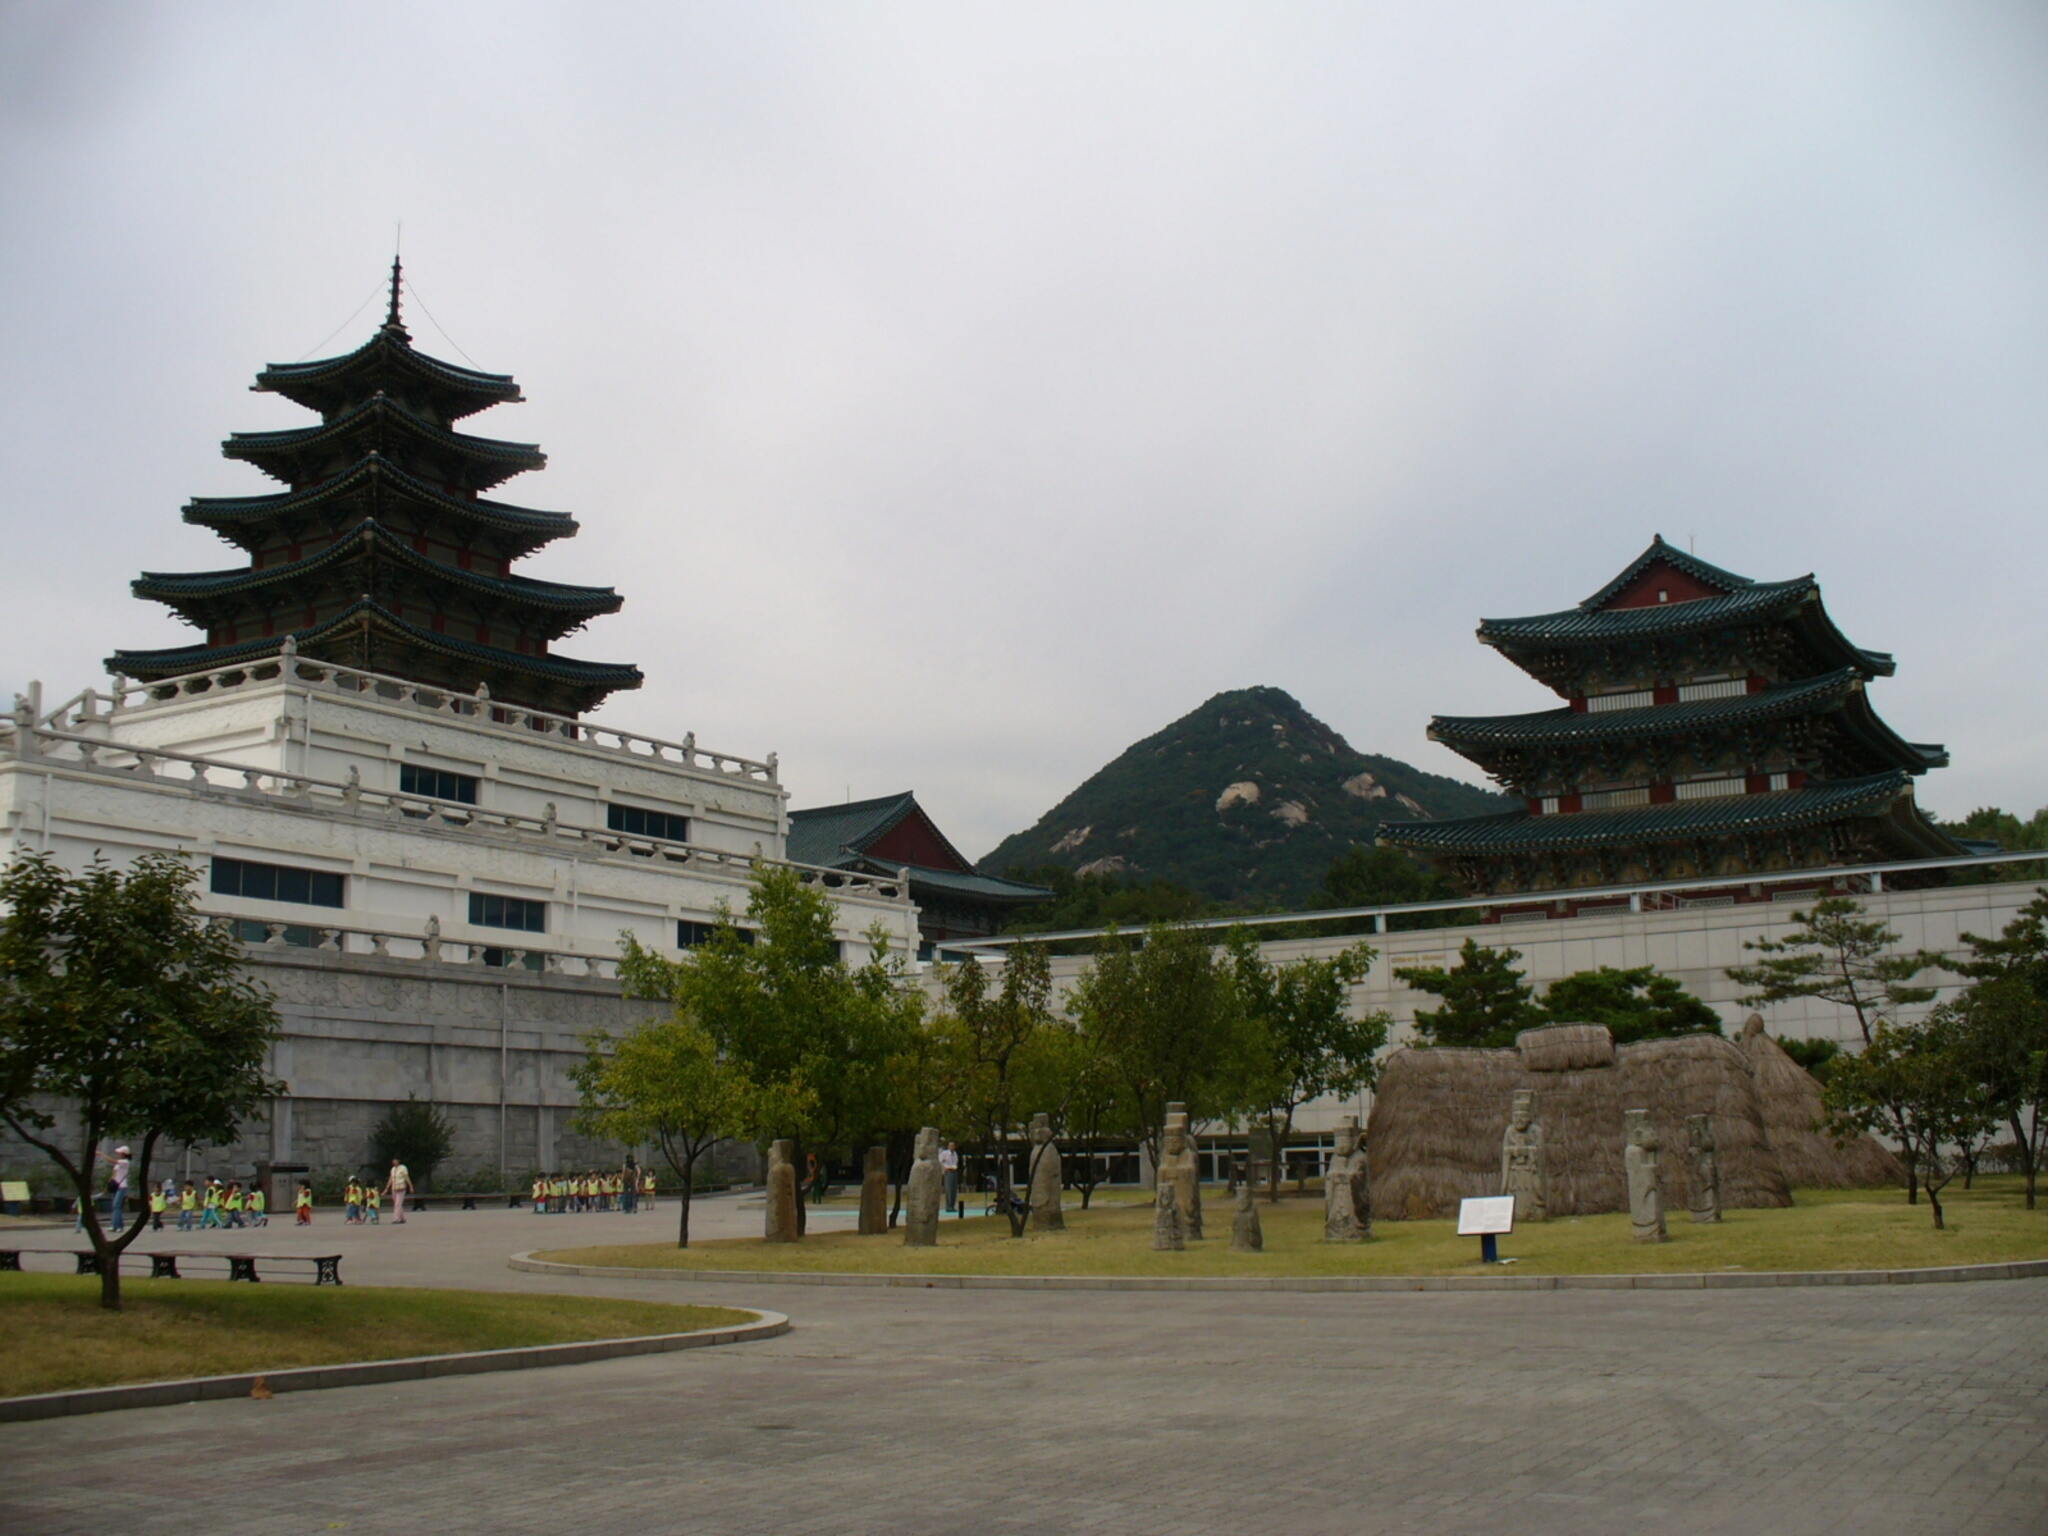 National Folk Museum of Korea located in Gyeongbokgung Palace, Seoul, Korea